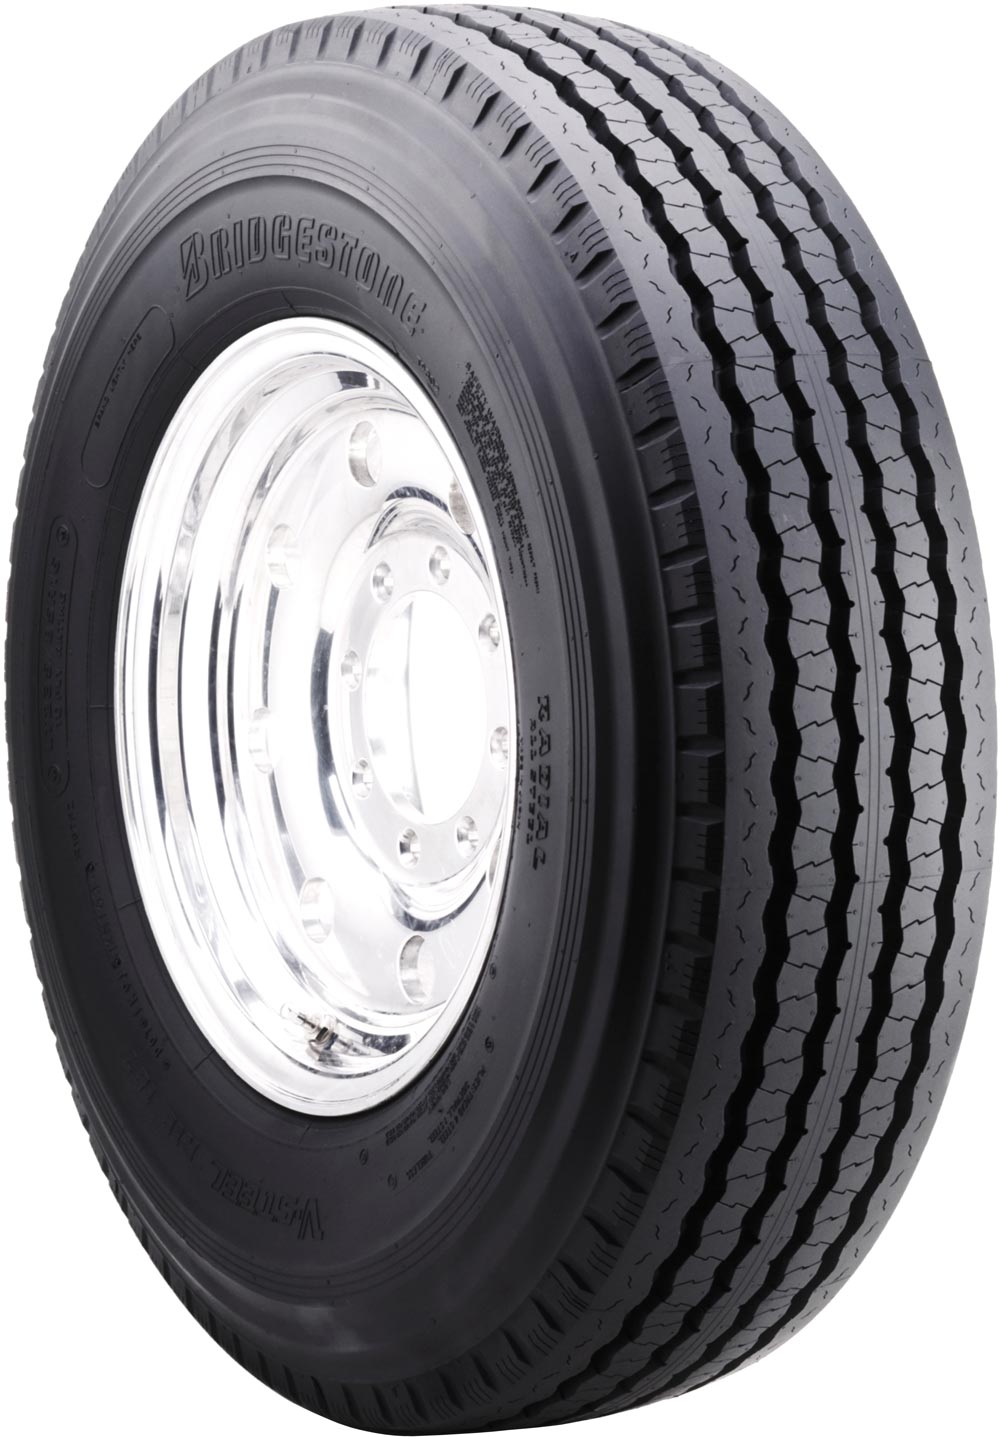 product_type-heavy_tires BRIDGESTONE R187 16PR TT 7.5 R15 135J